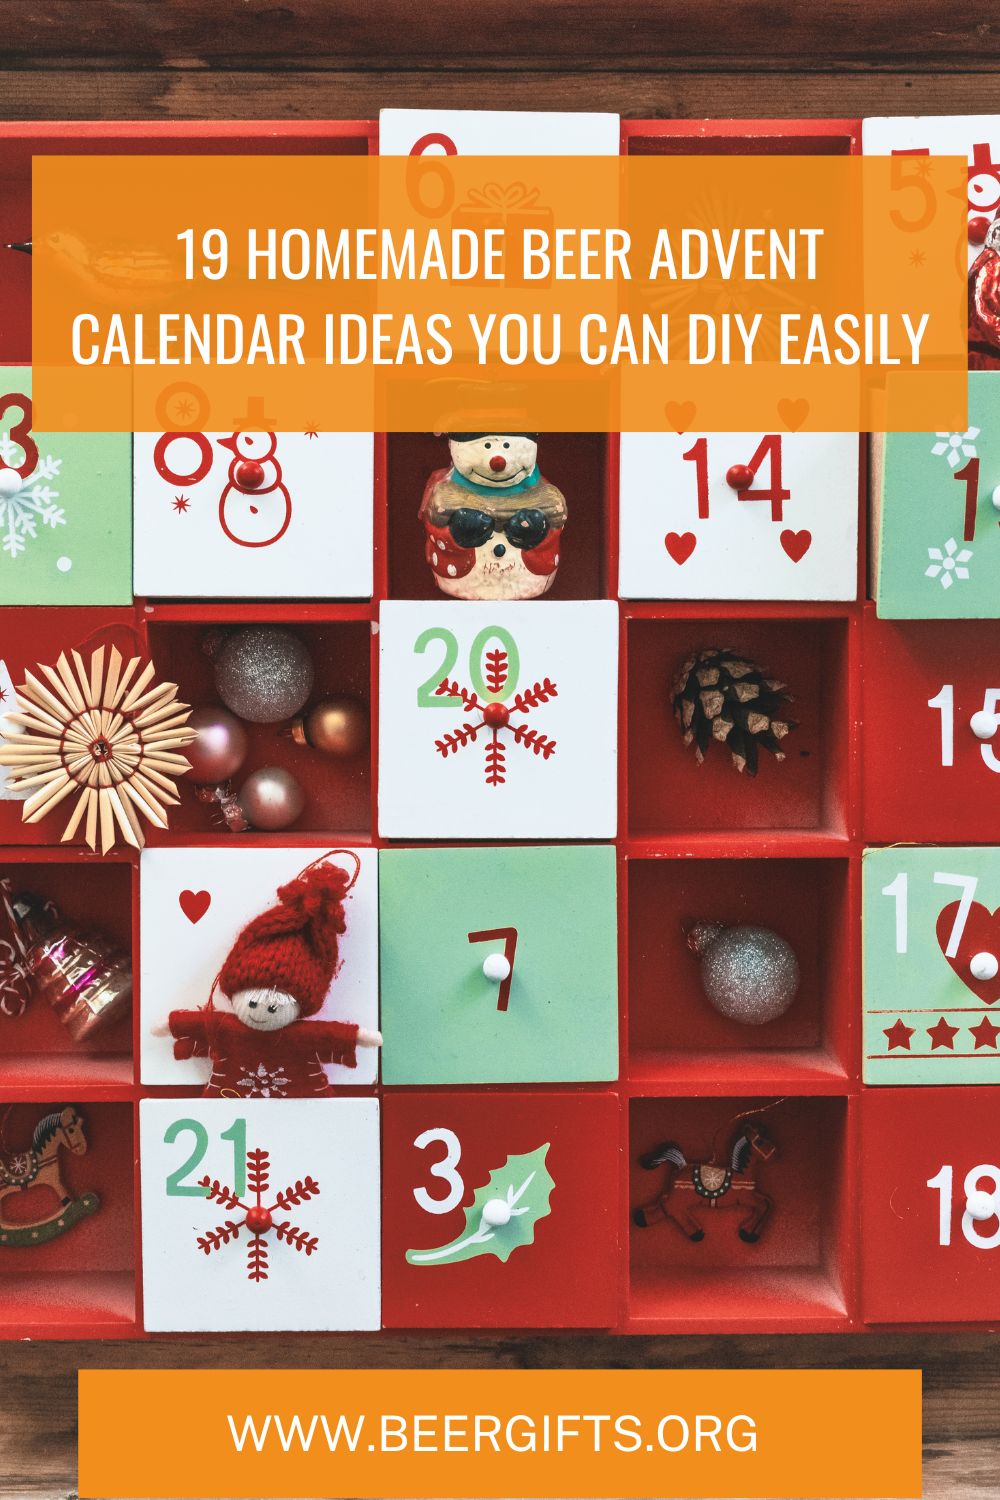 19 Homemade Beer Advent Calendar ideas You Can DIY Easily1